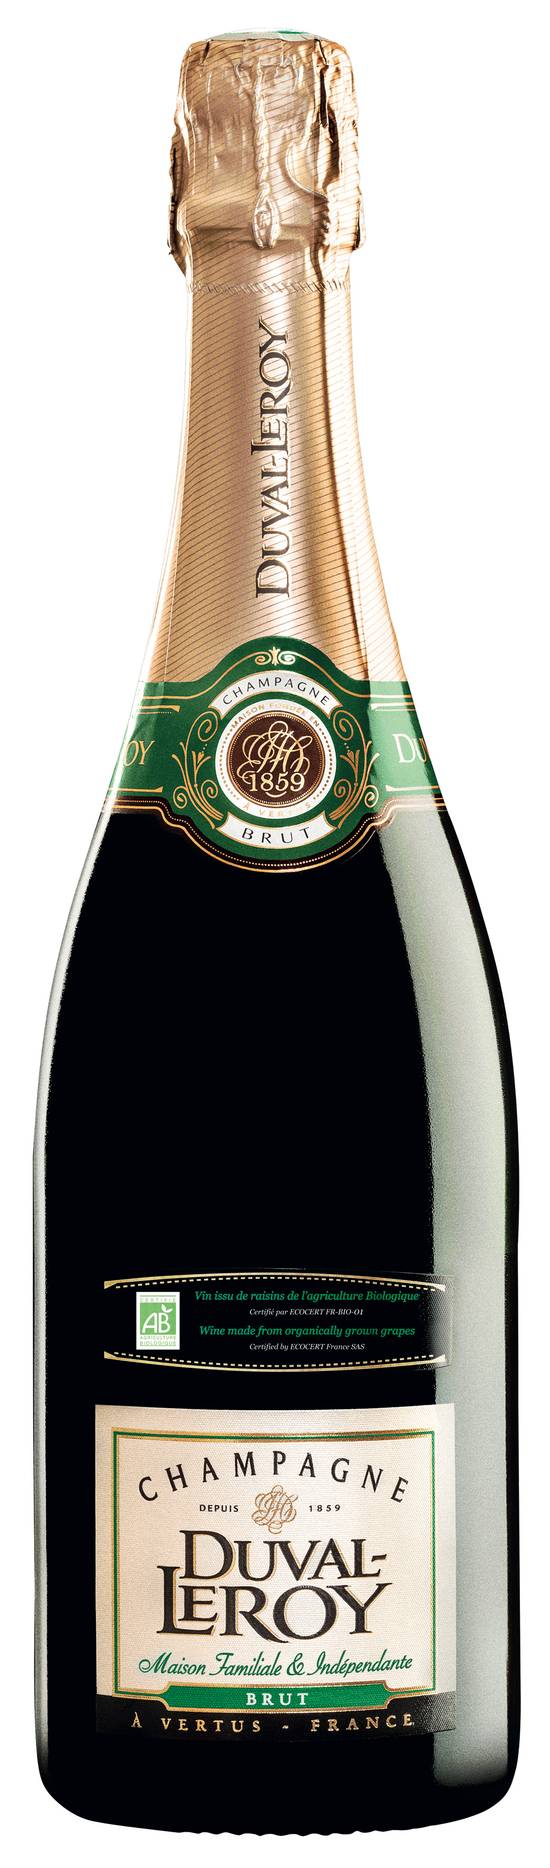 Duval-Leroy - Champagne brut bio (750 ml)